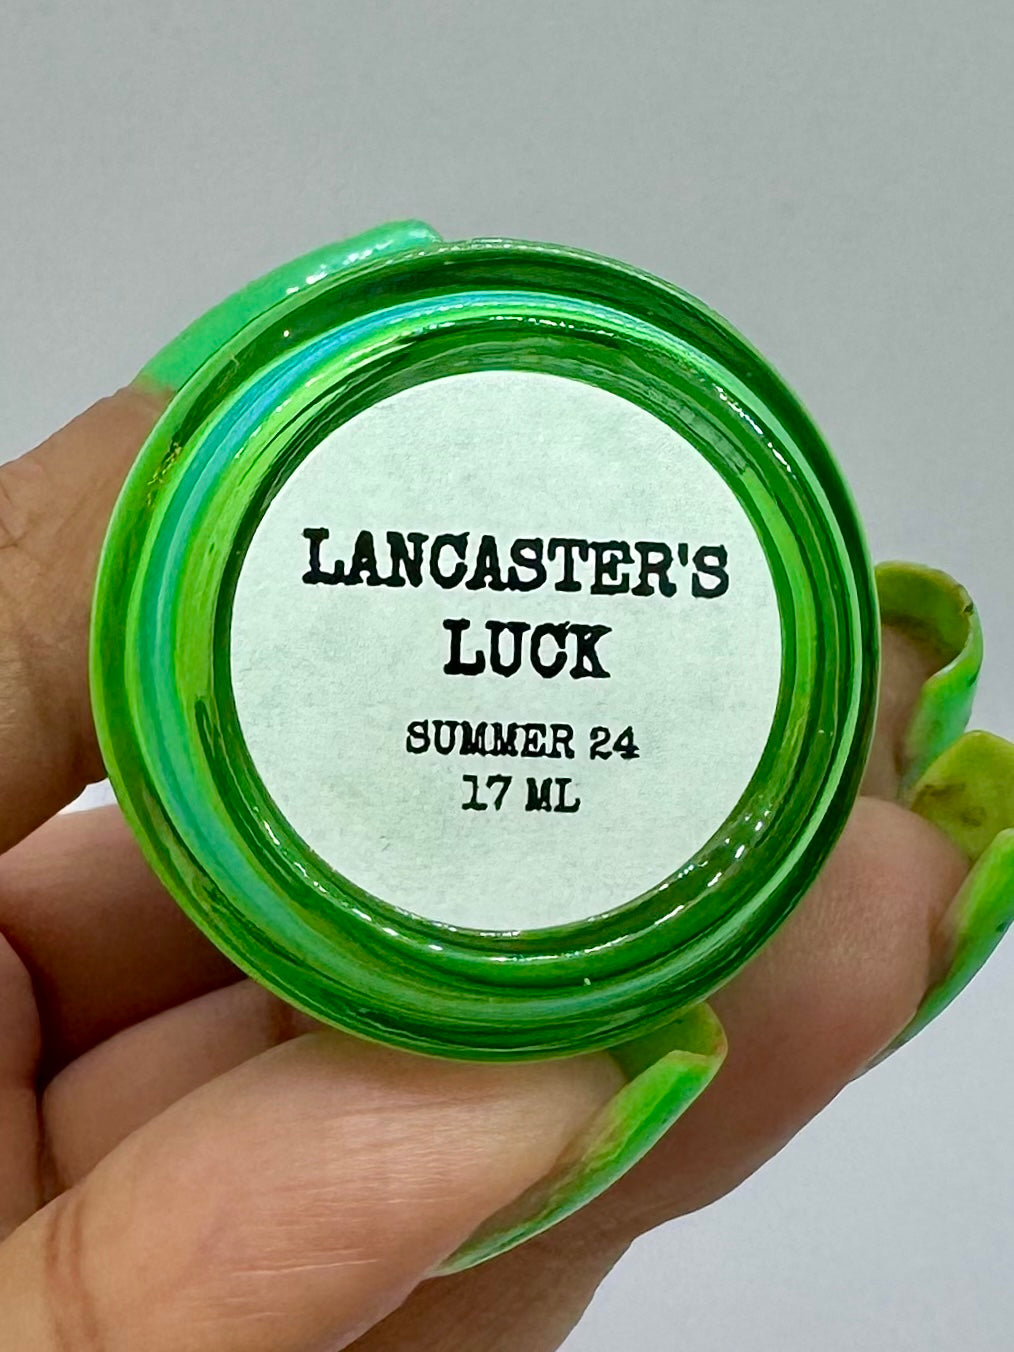 LANCASTER'S LUCK